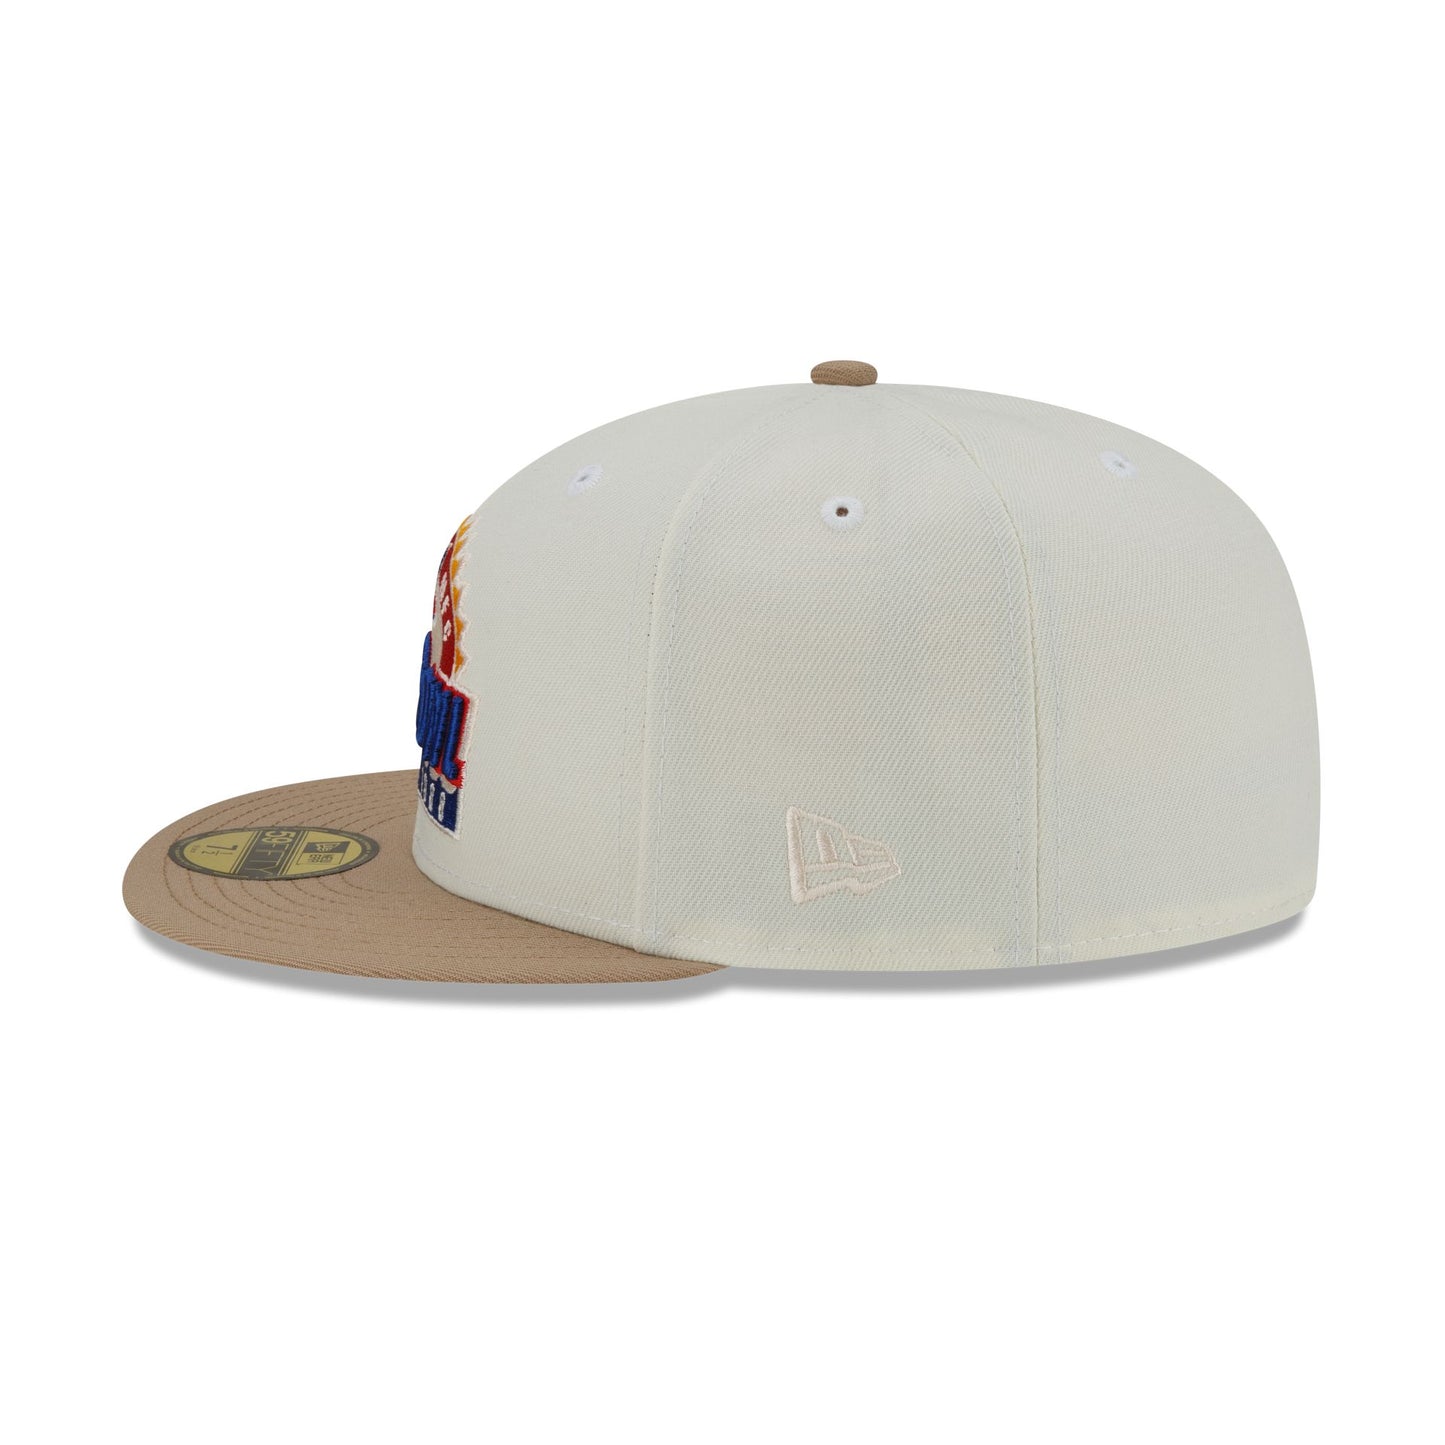 Just Caps Camel Visor San Francisco 49ers 59FIFTY Fitted Hat – New Era Cap